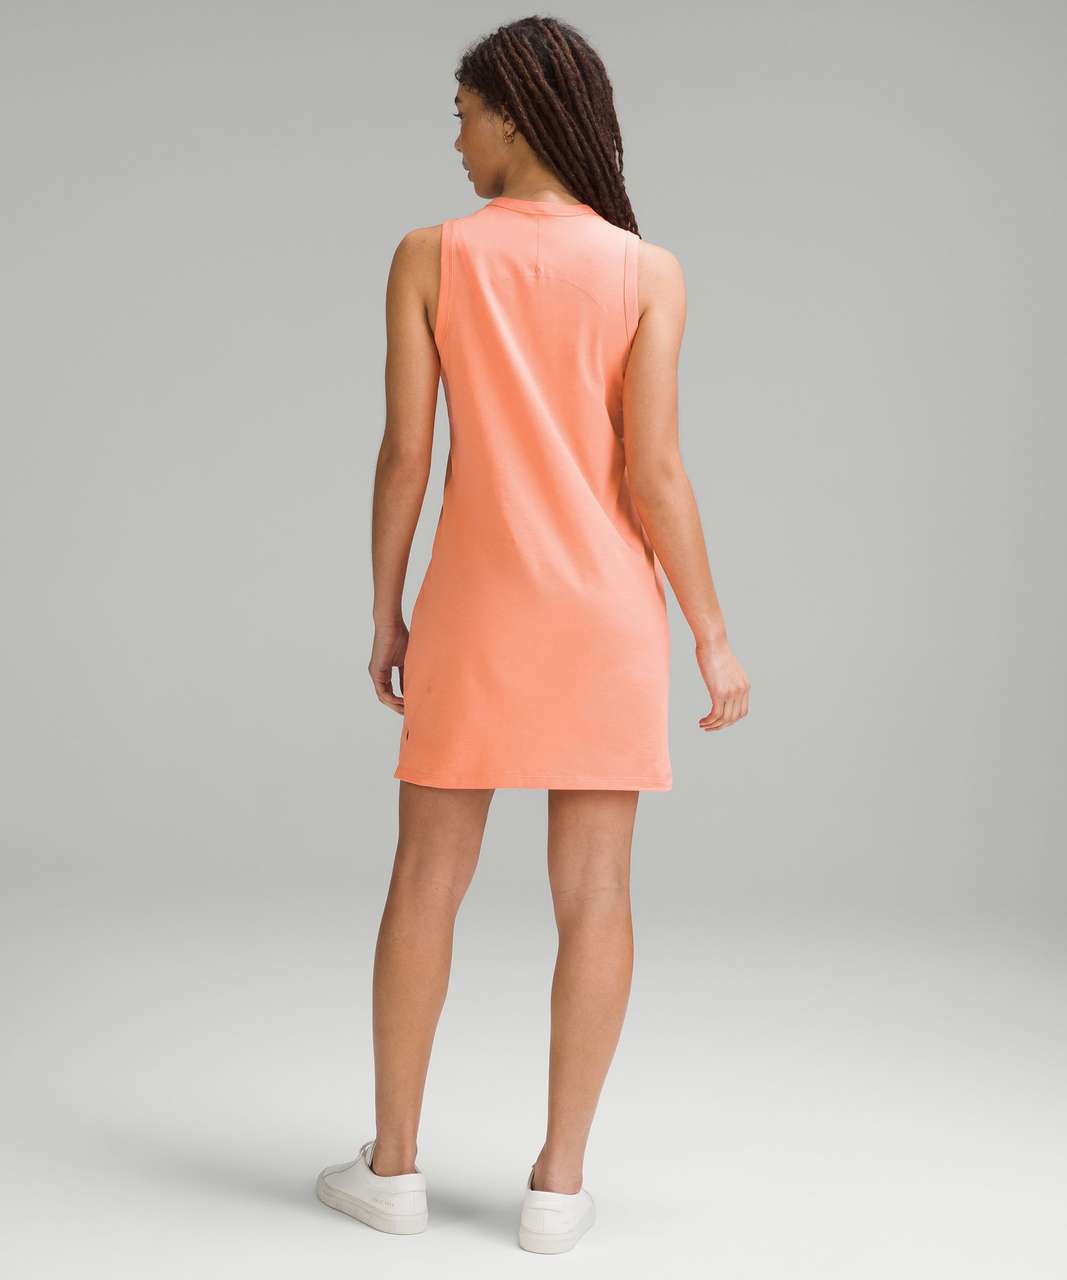 Lululemon Classic-Fit Cotton-Blend Dress - Sunny Coral